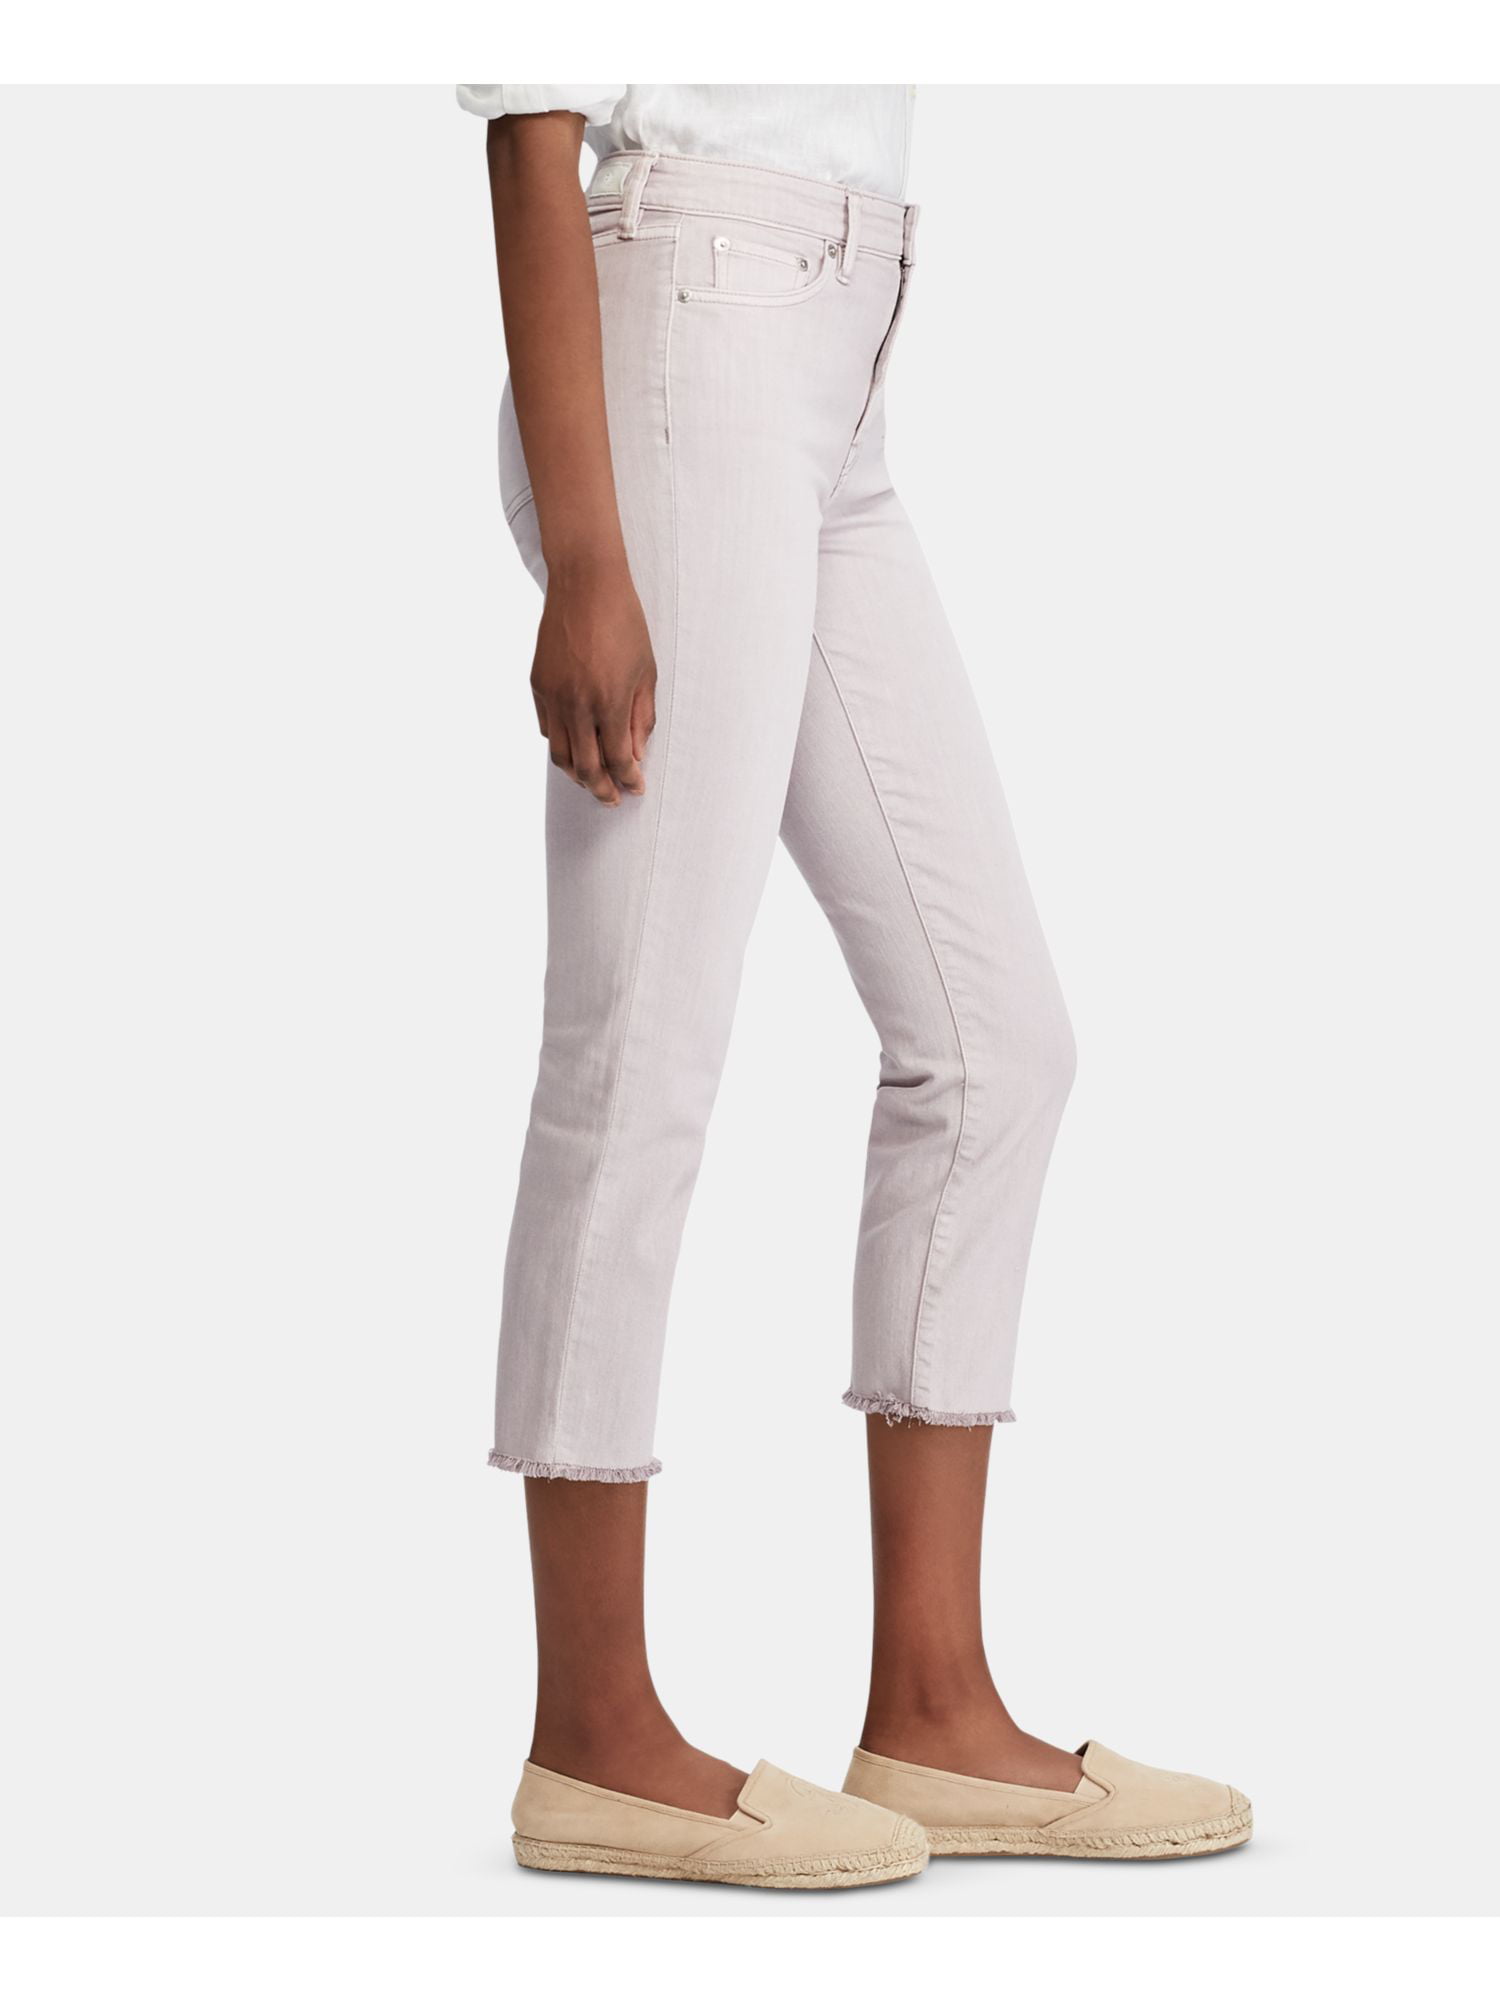 ralph lauren white jeans